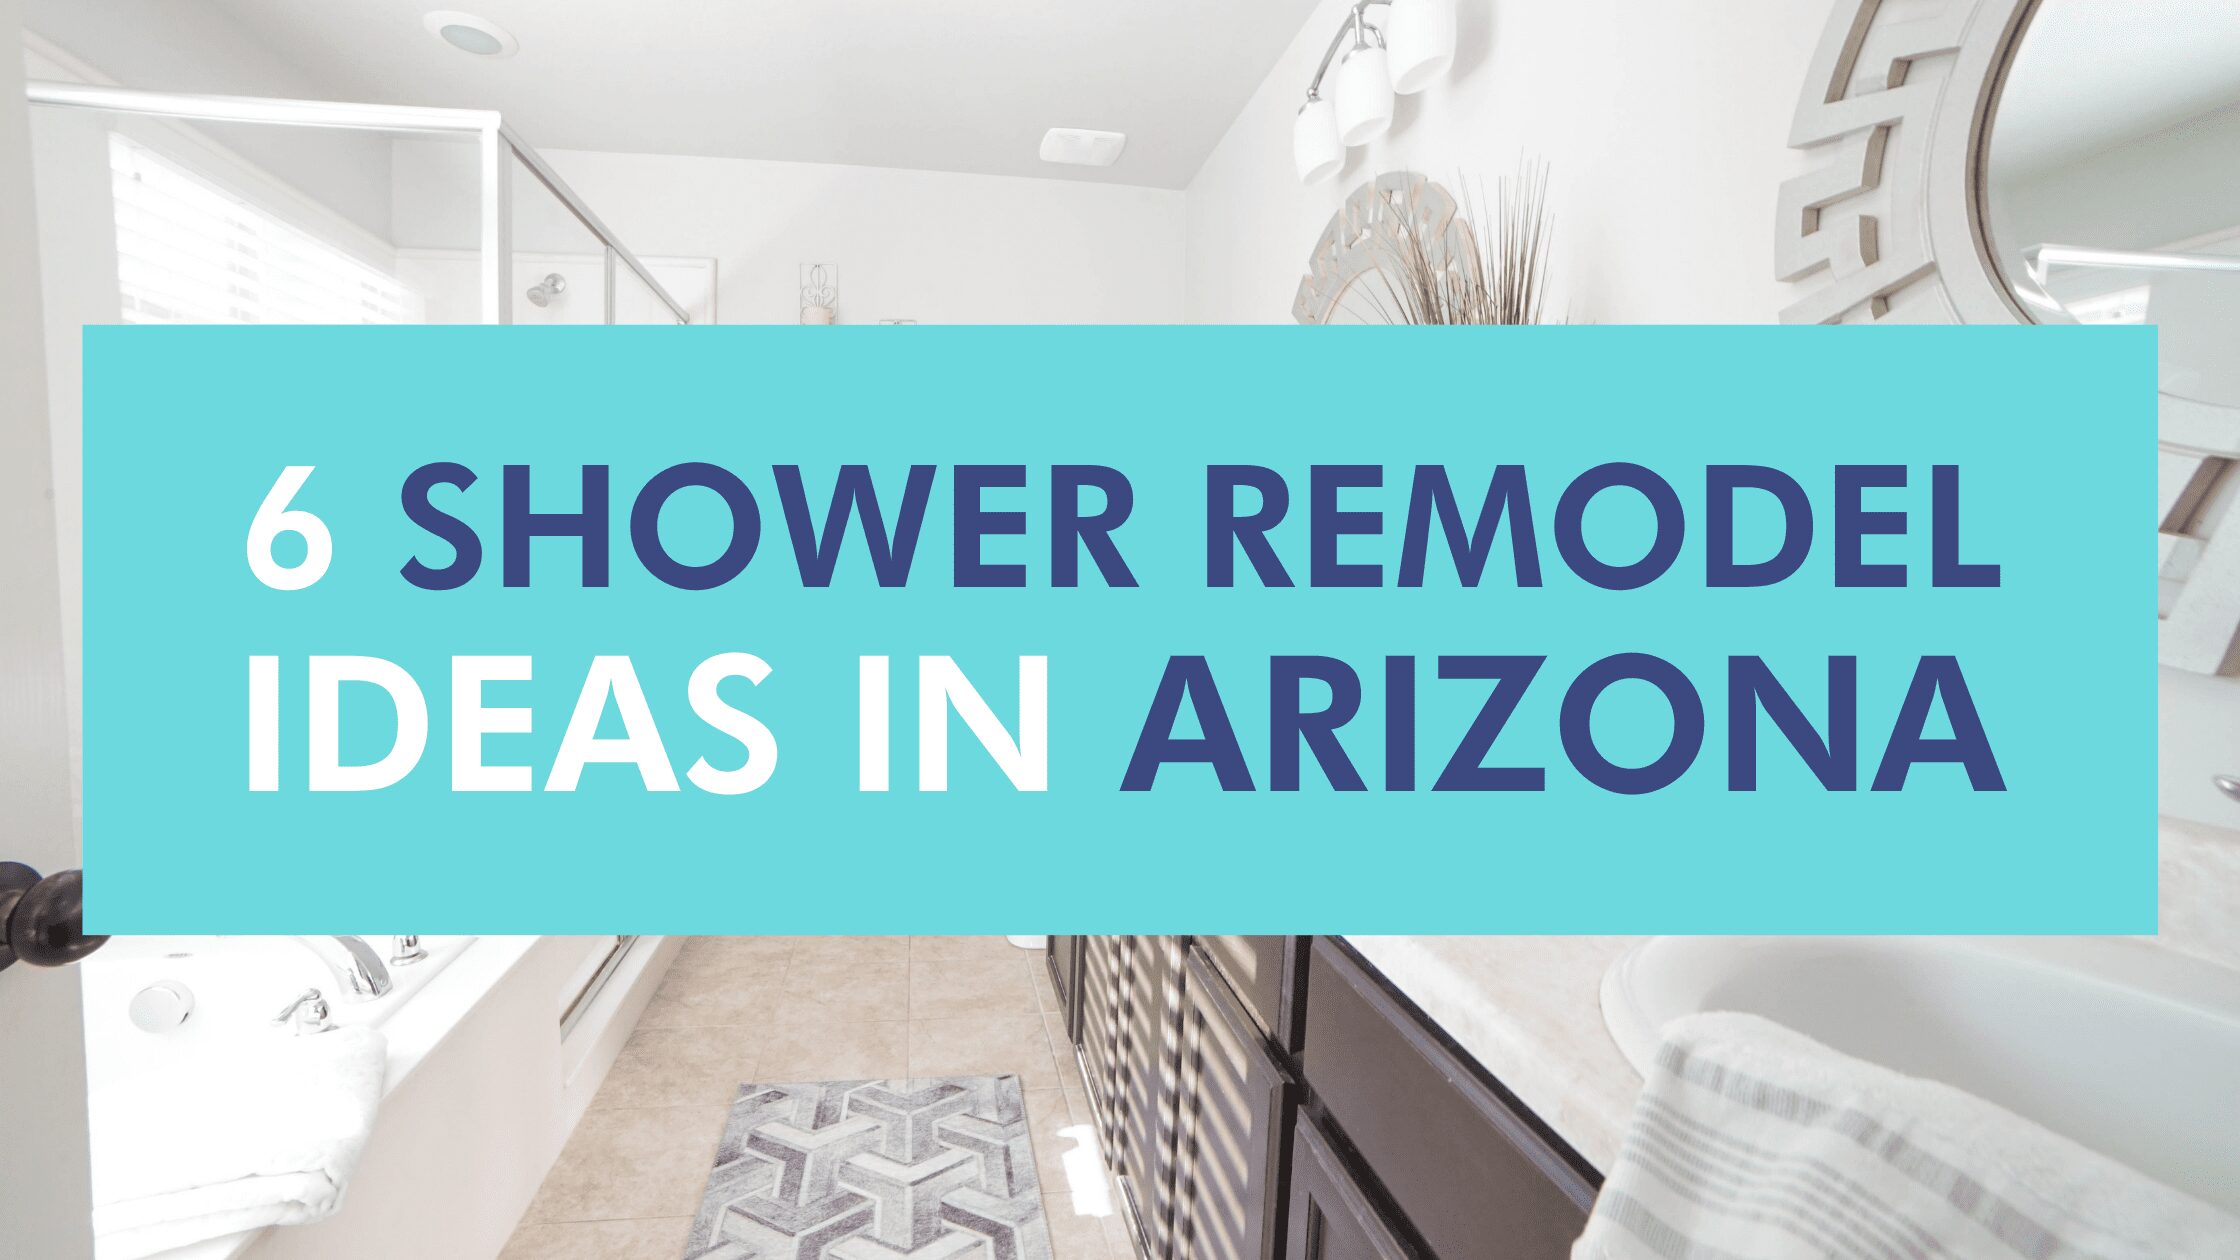 Shower Remodel Ideas in Arizona